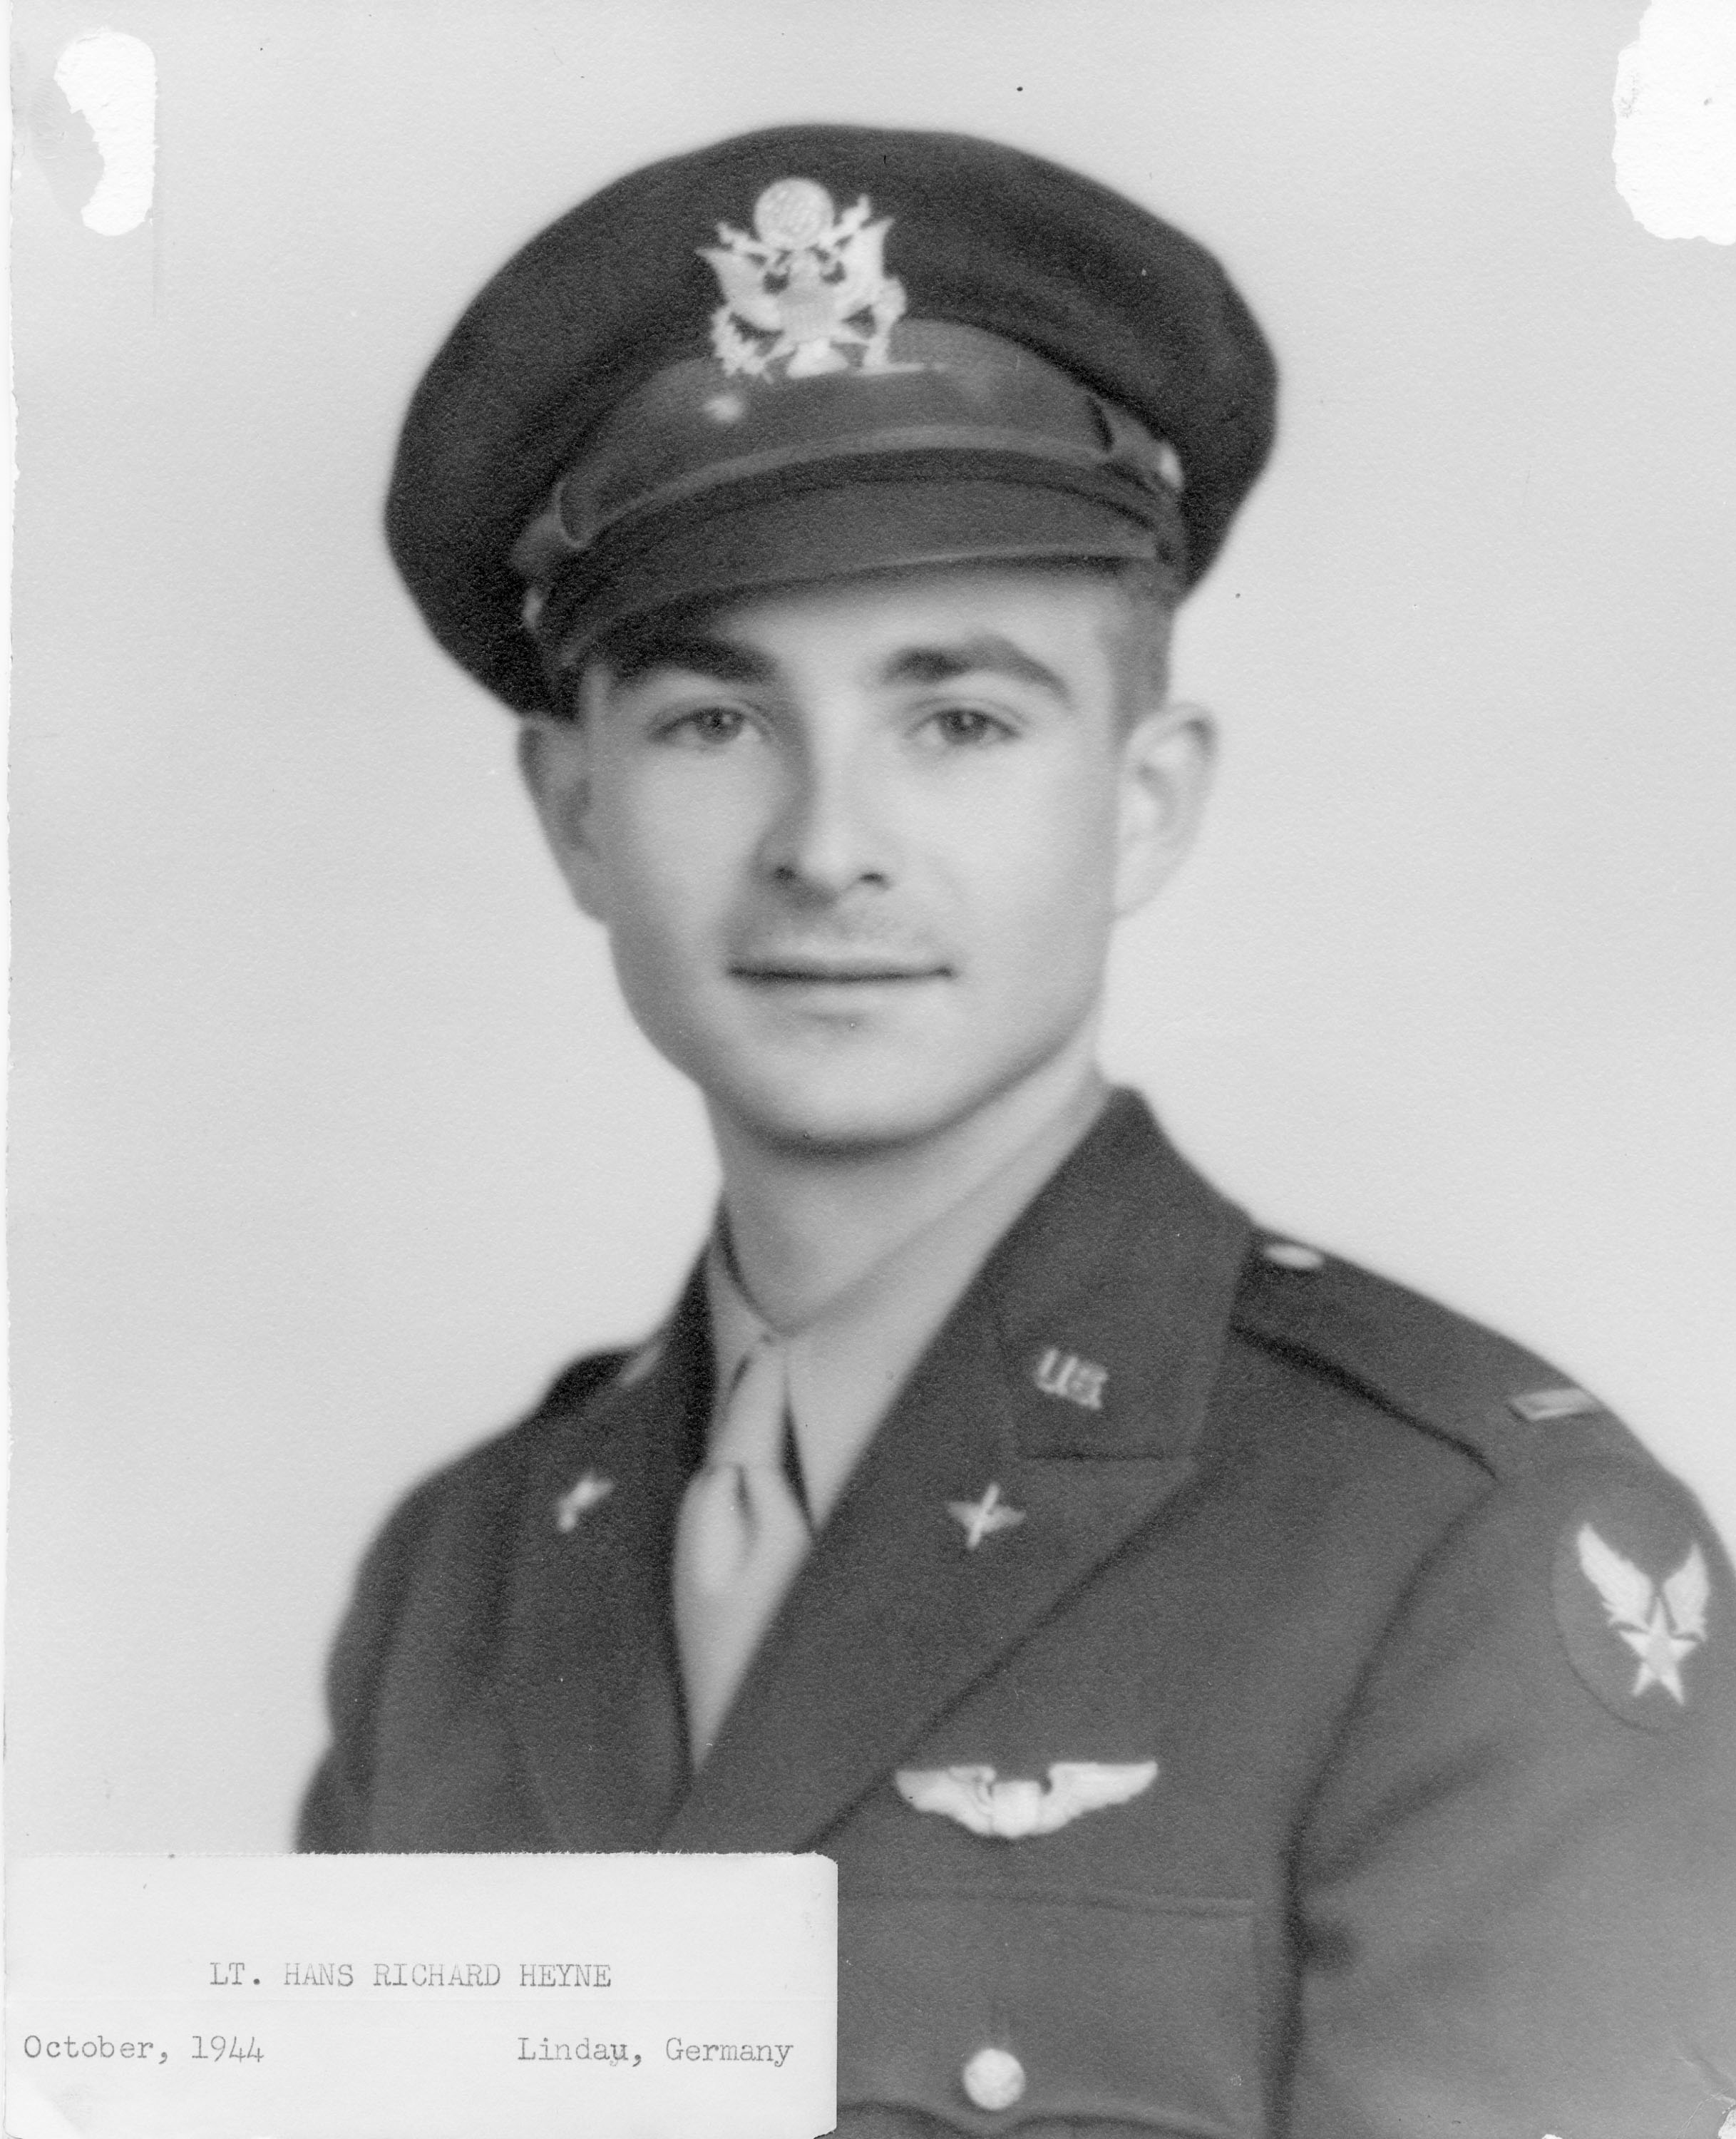 Lt. Hans Richard Heyne